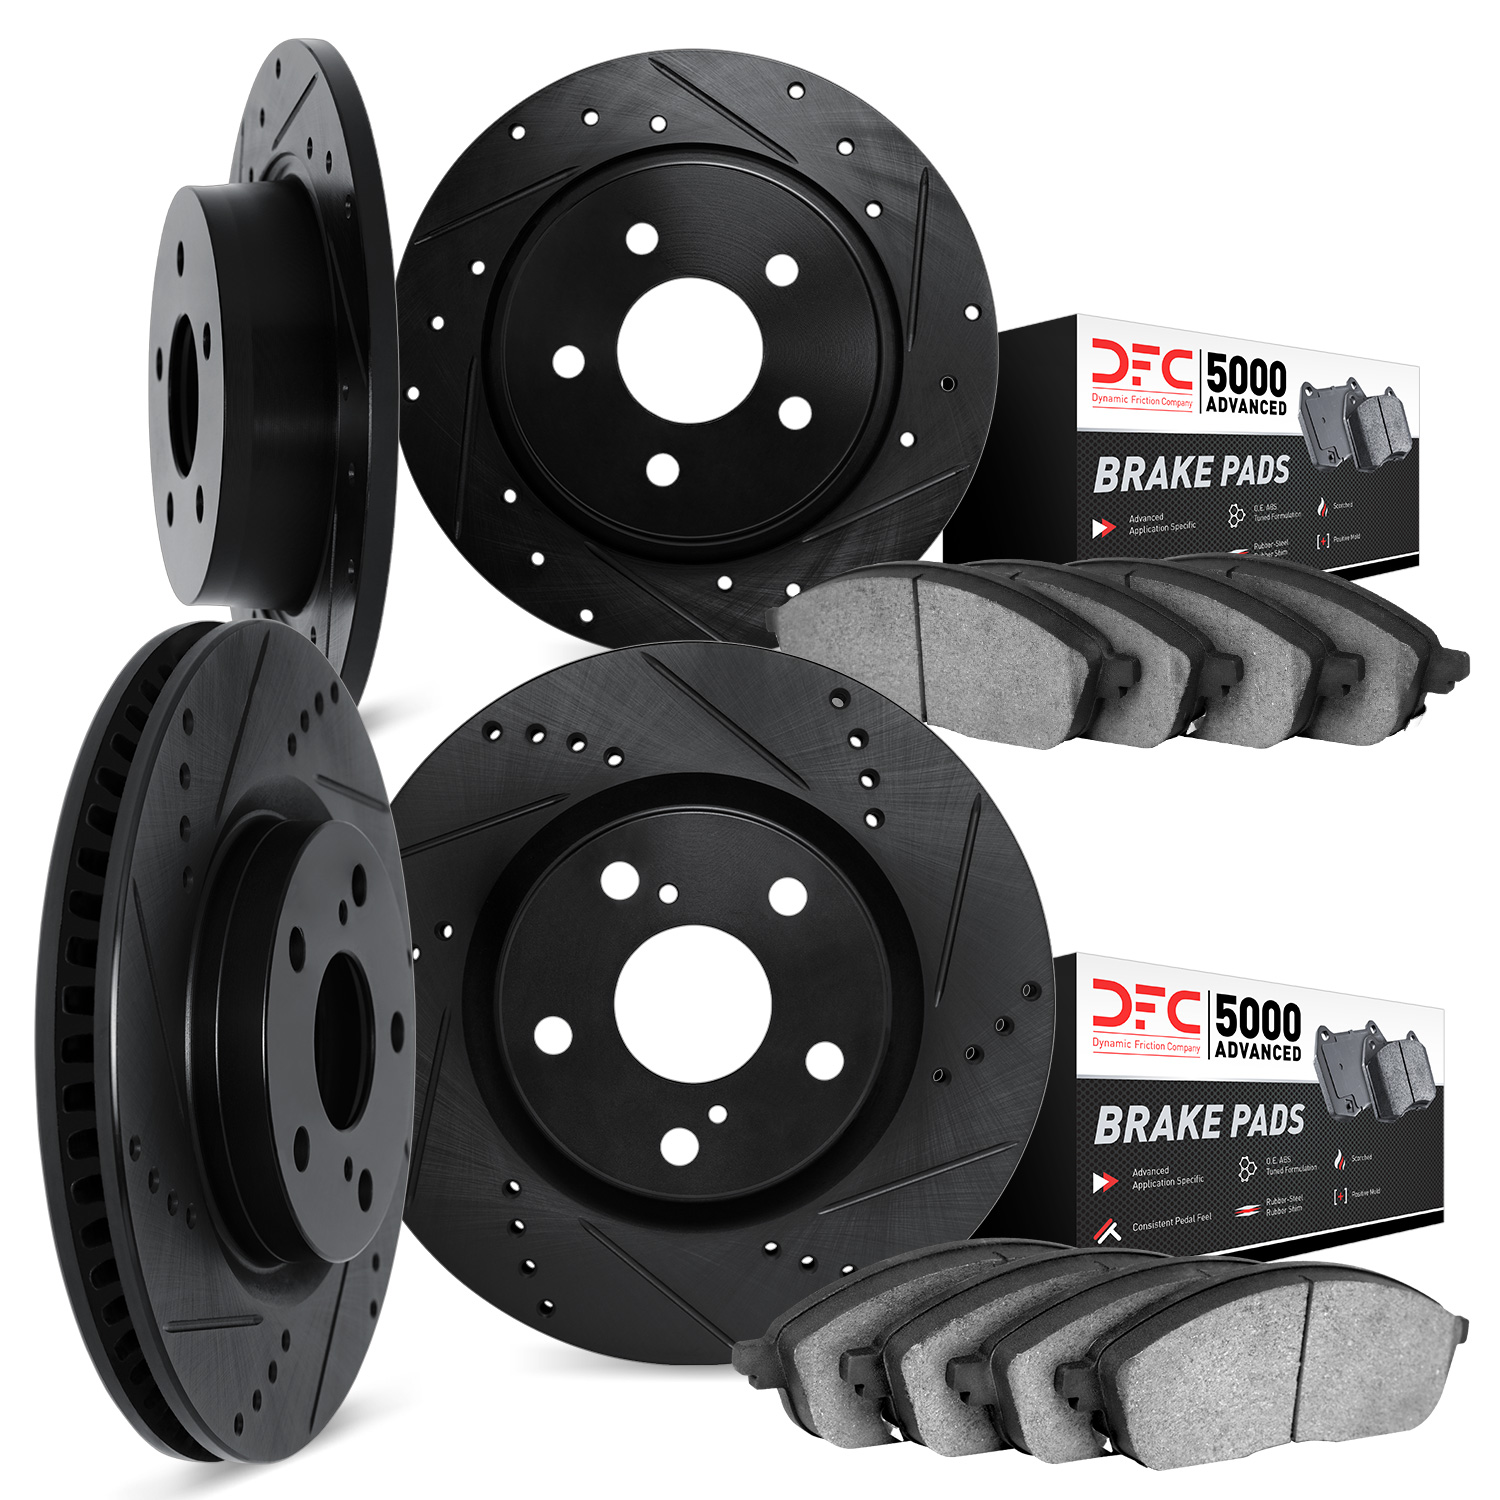 8504-54288 Drilled/Slotted Brake Rotors w/5000 Advanced Brake Pads Kit [Black], 2009-2010 Ford/Lincoln/Mercury/Mazda, Position: